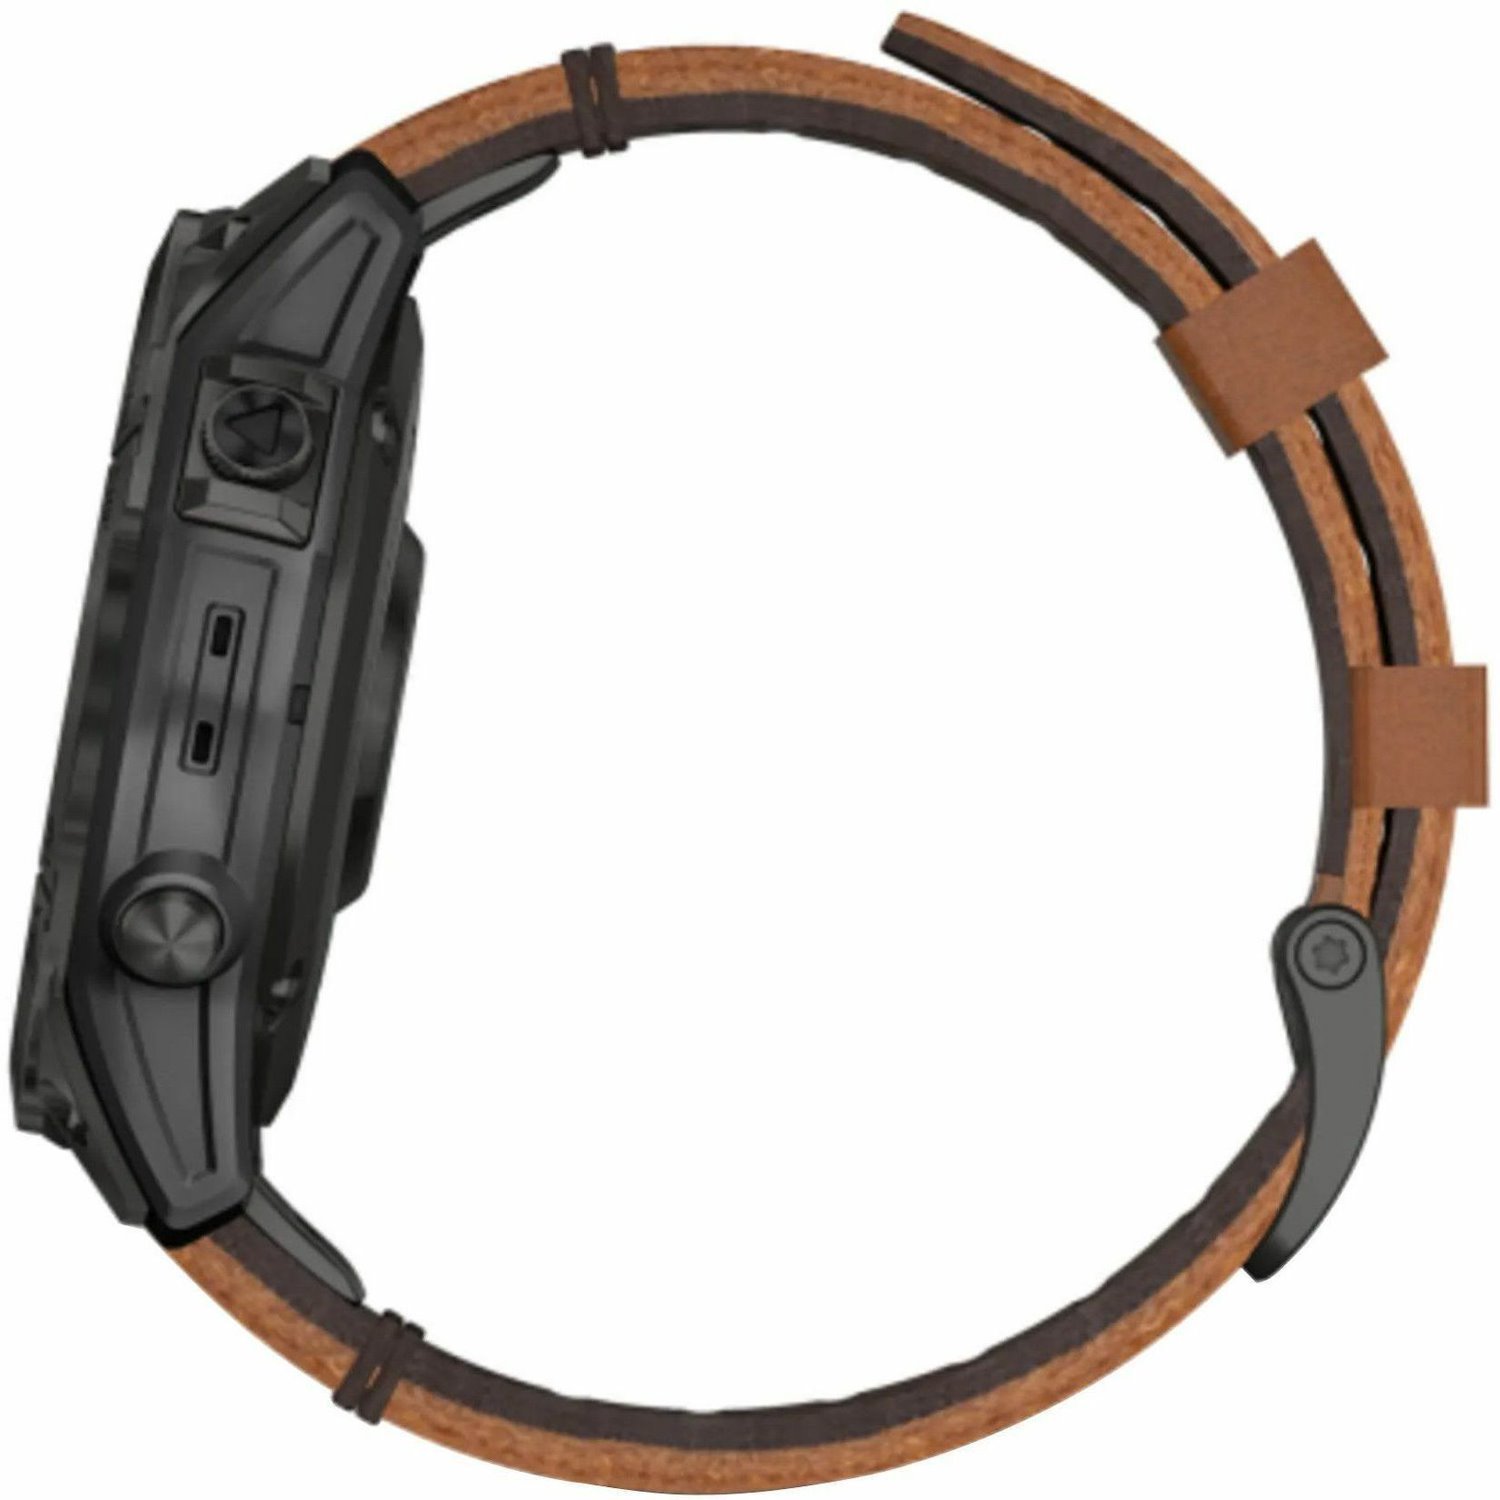 Garmin epix (Gen 2) Smart Watch - Titanium, Black Case Color - Chestnut Band Color - Titanium, Fiber Reinforced Polymer Case Material - Leather Band Material - Wireless LAN